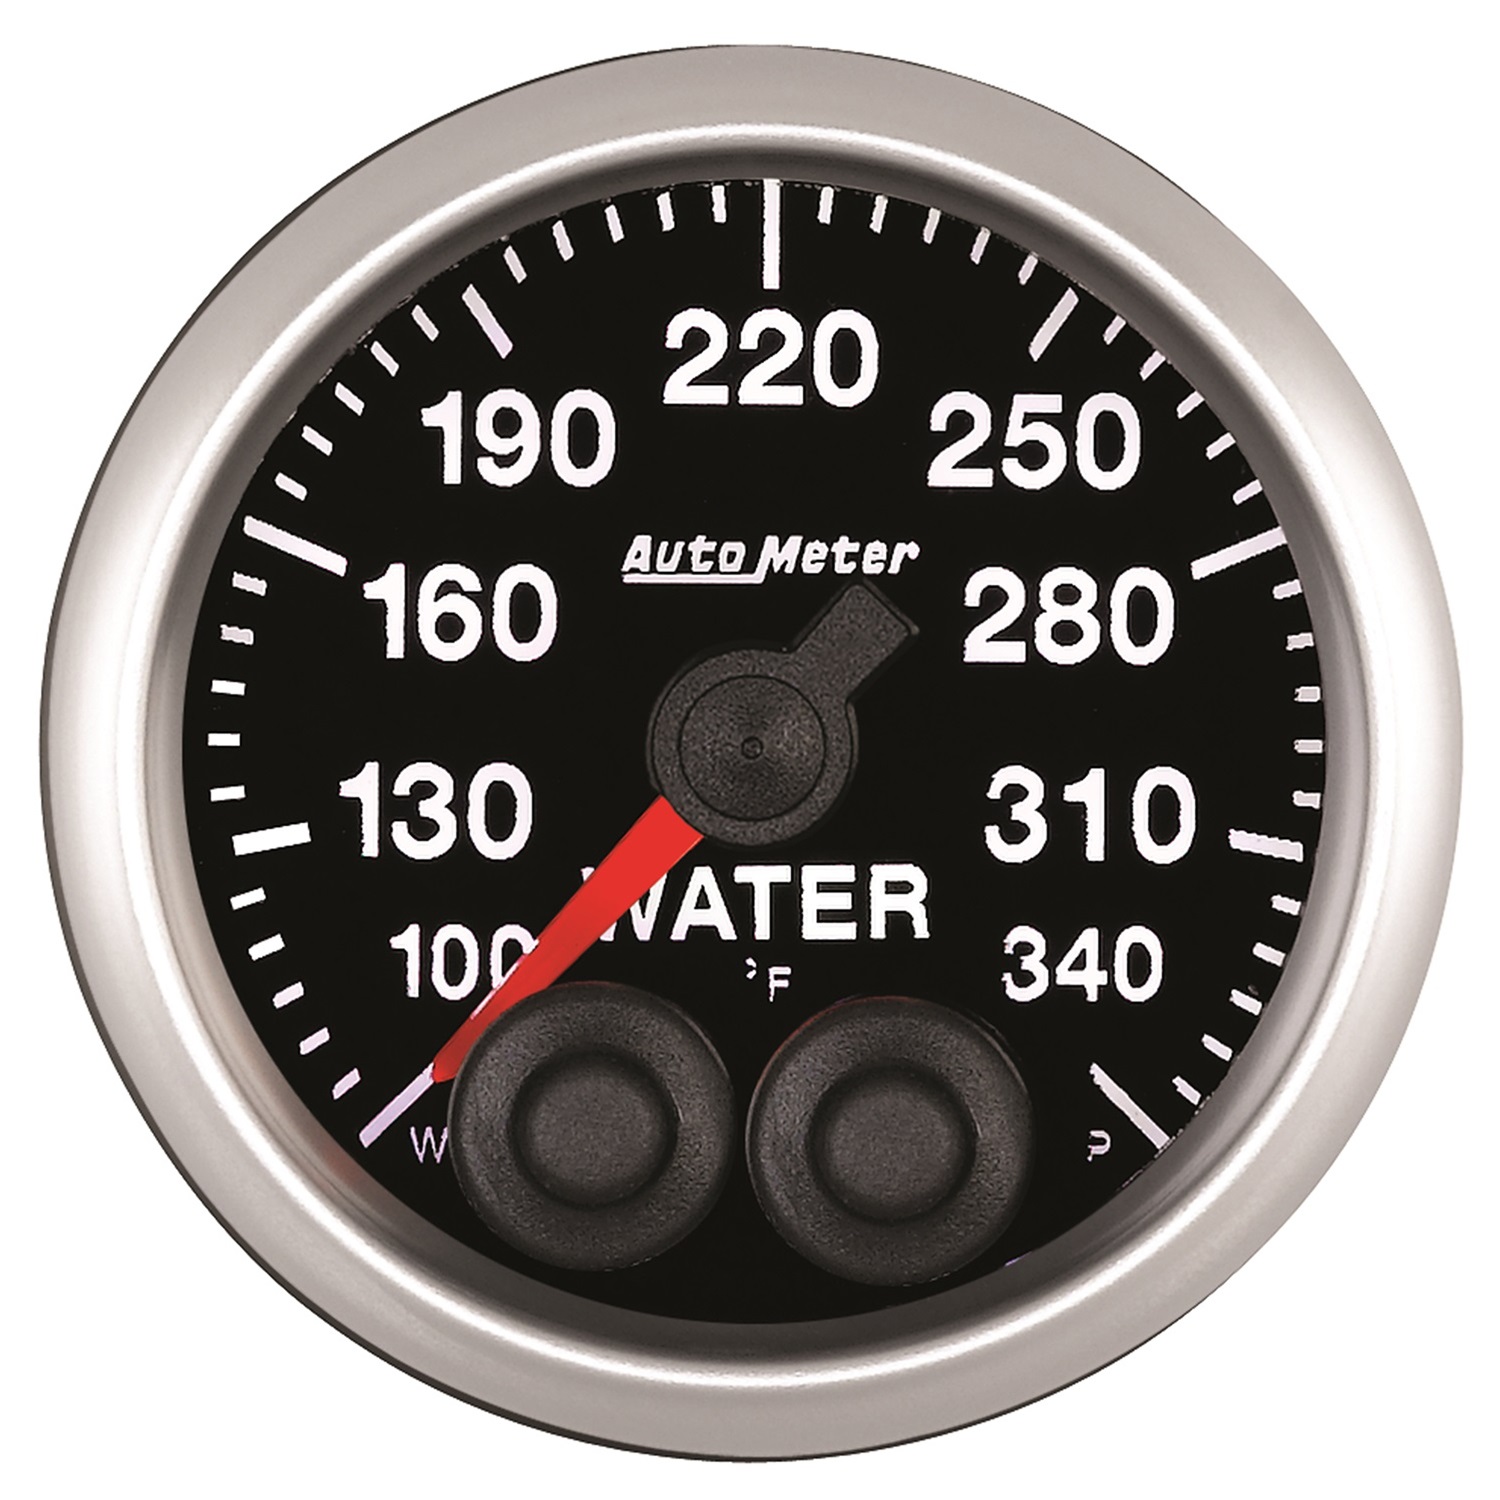 Auto Meter Auto Meter 5555 Competition Series; Water Temperature Gauge